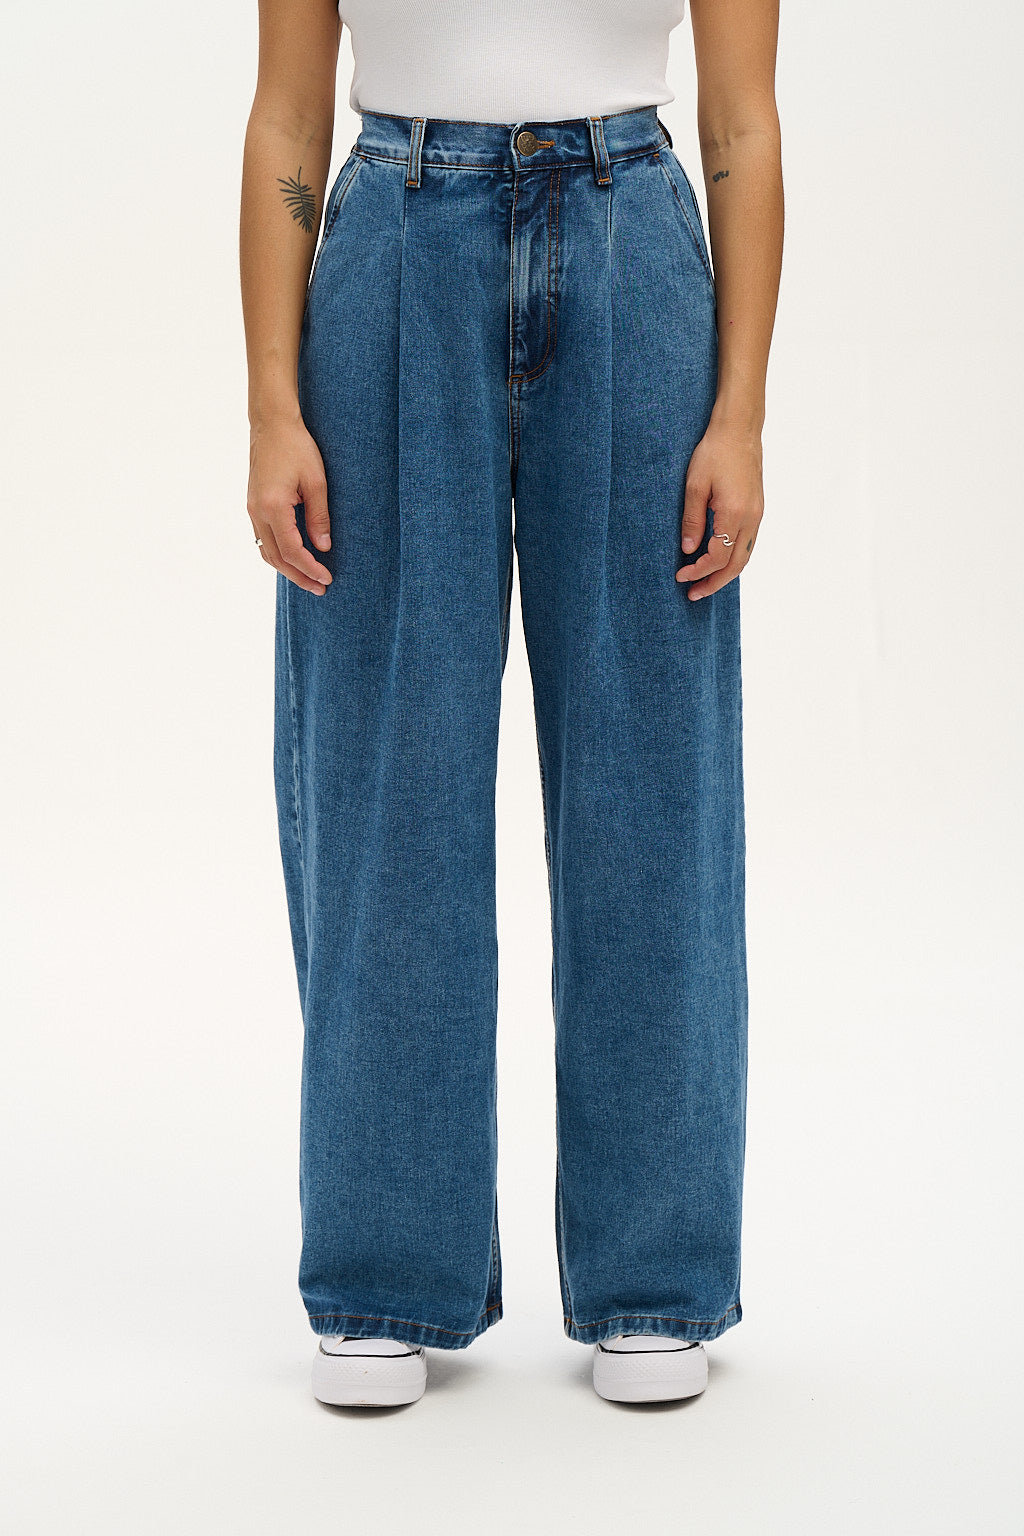 Comprar Calça Jeans Feminina c/cinto-Bi strech 360-LD2101 - Loyal Denim